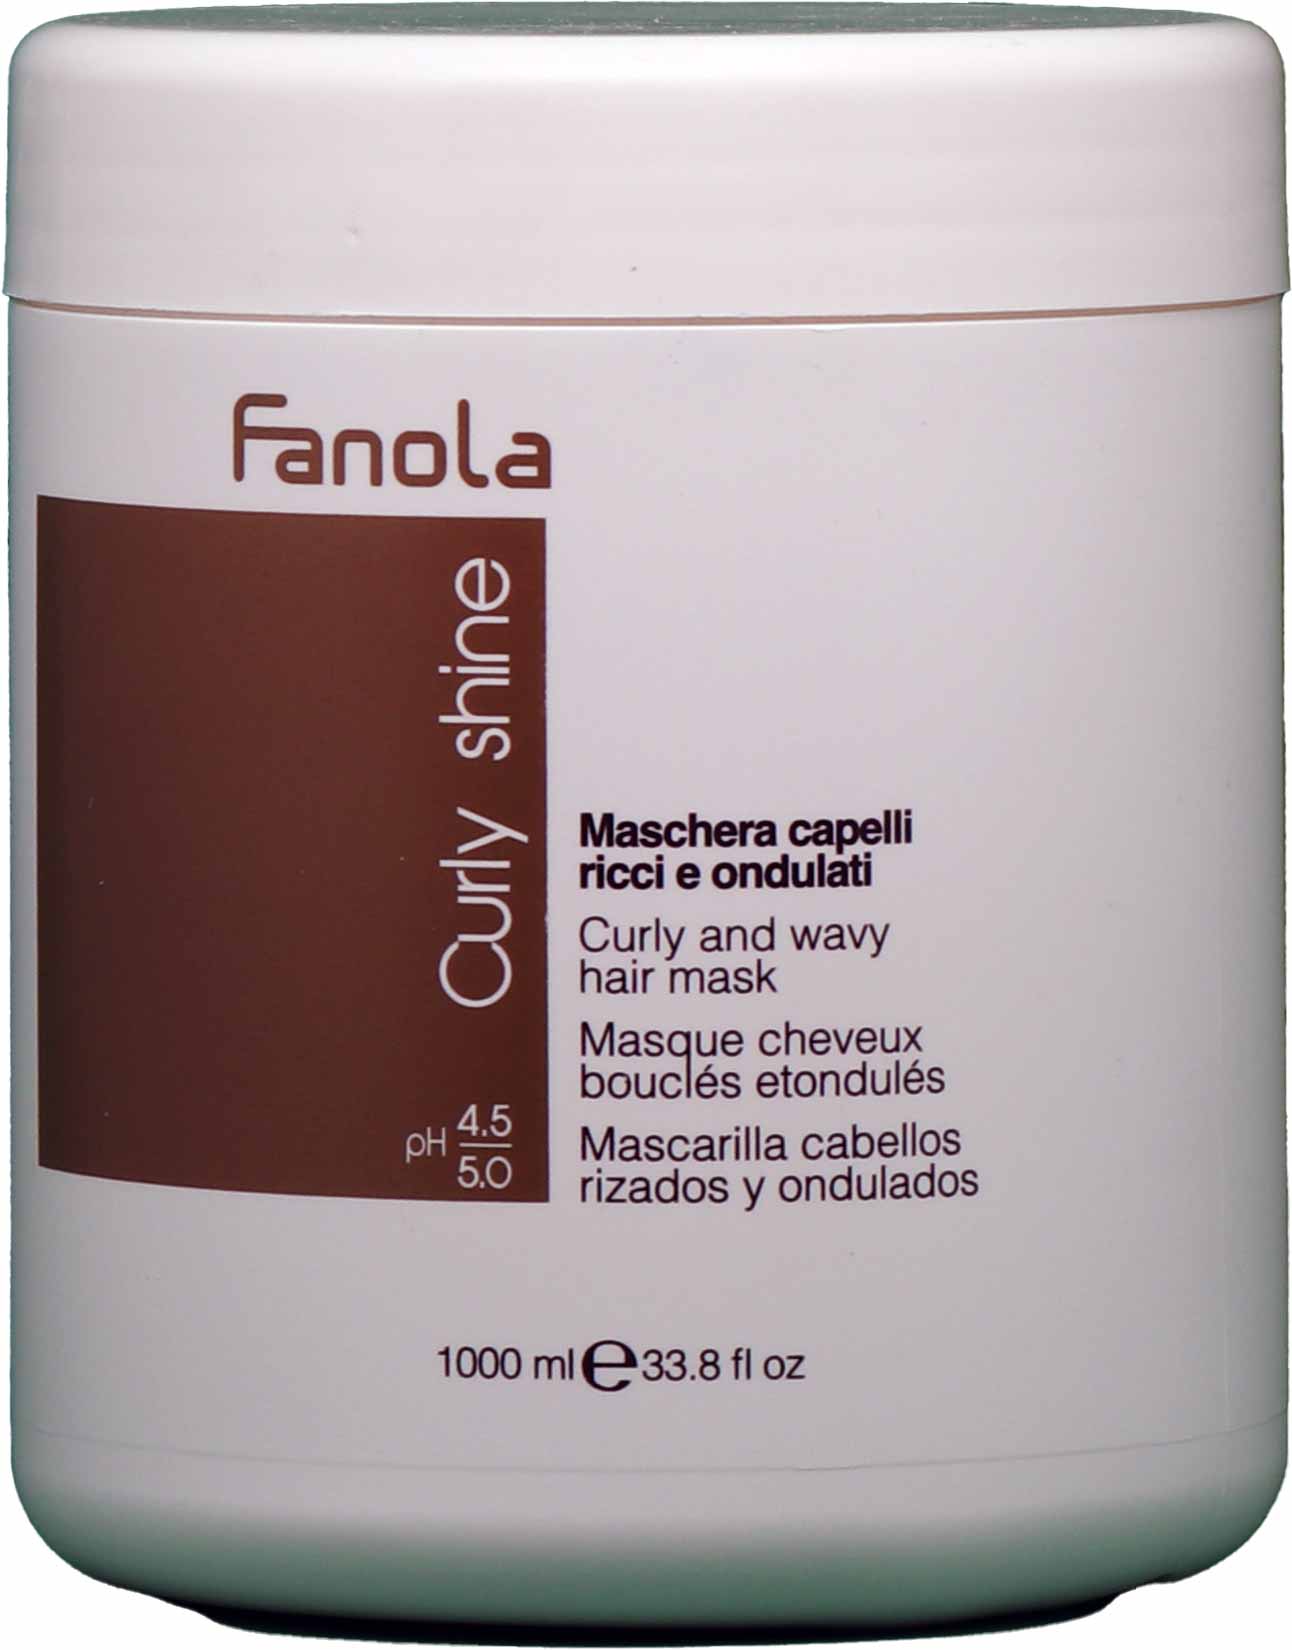 Fanola Curly Shine Maschera capelli ricci e ondulati - Maske für lockiges Haar 1000ml